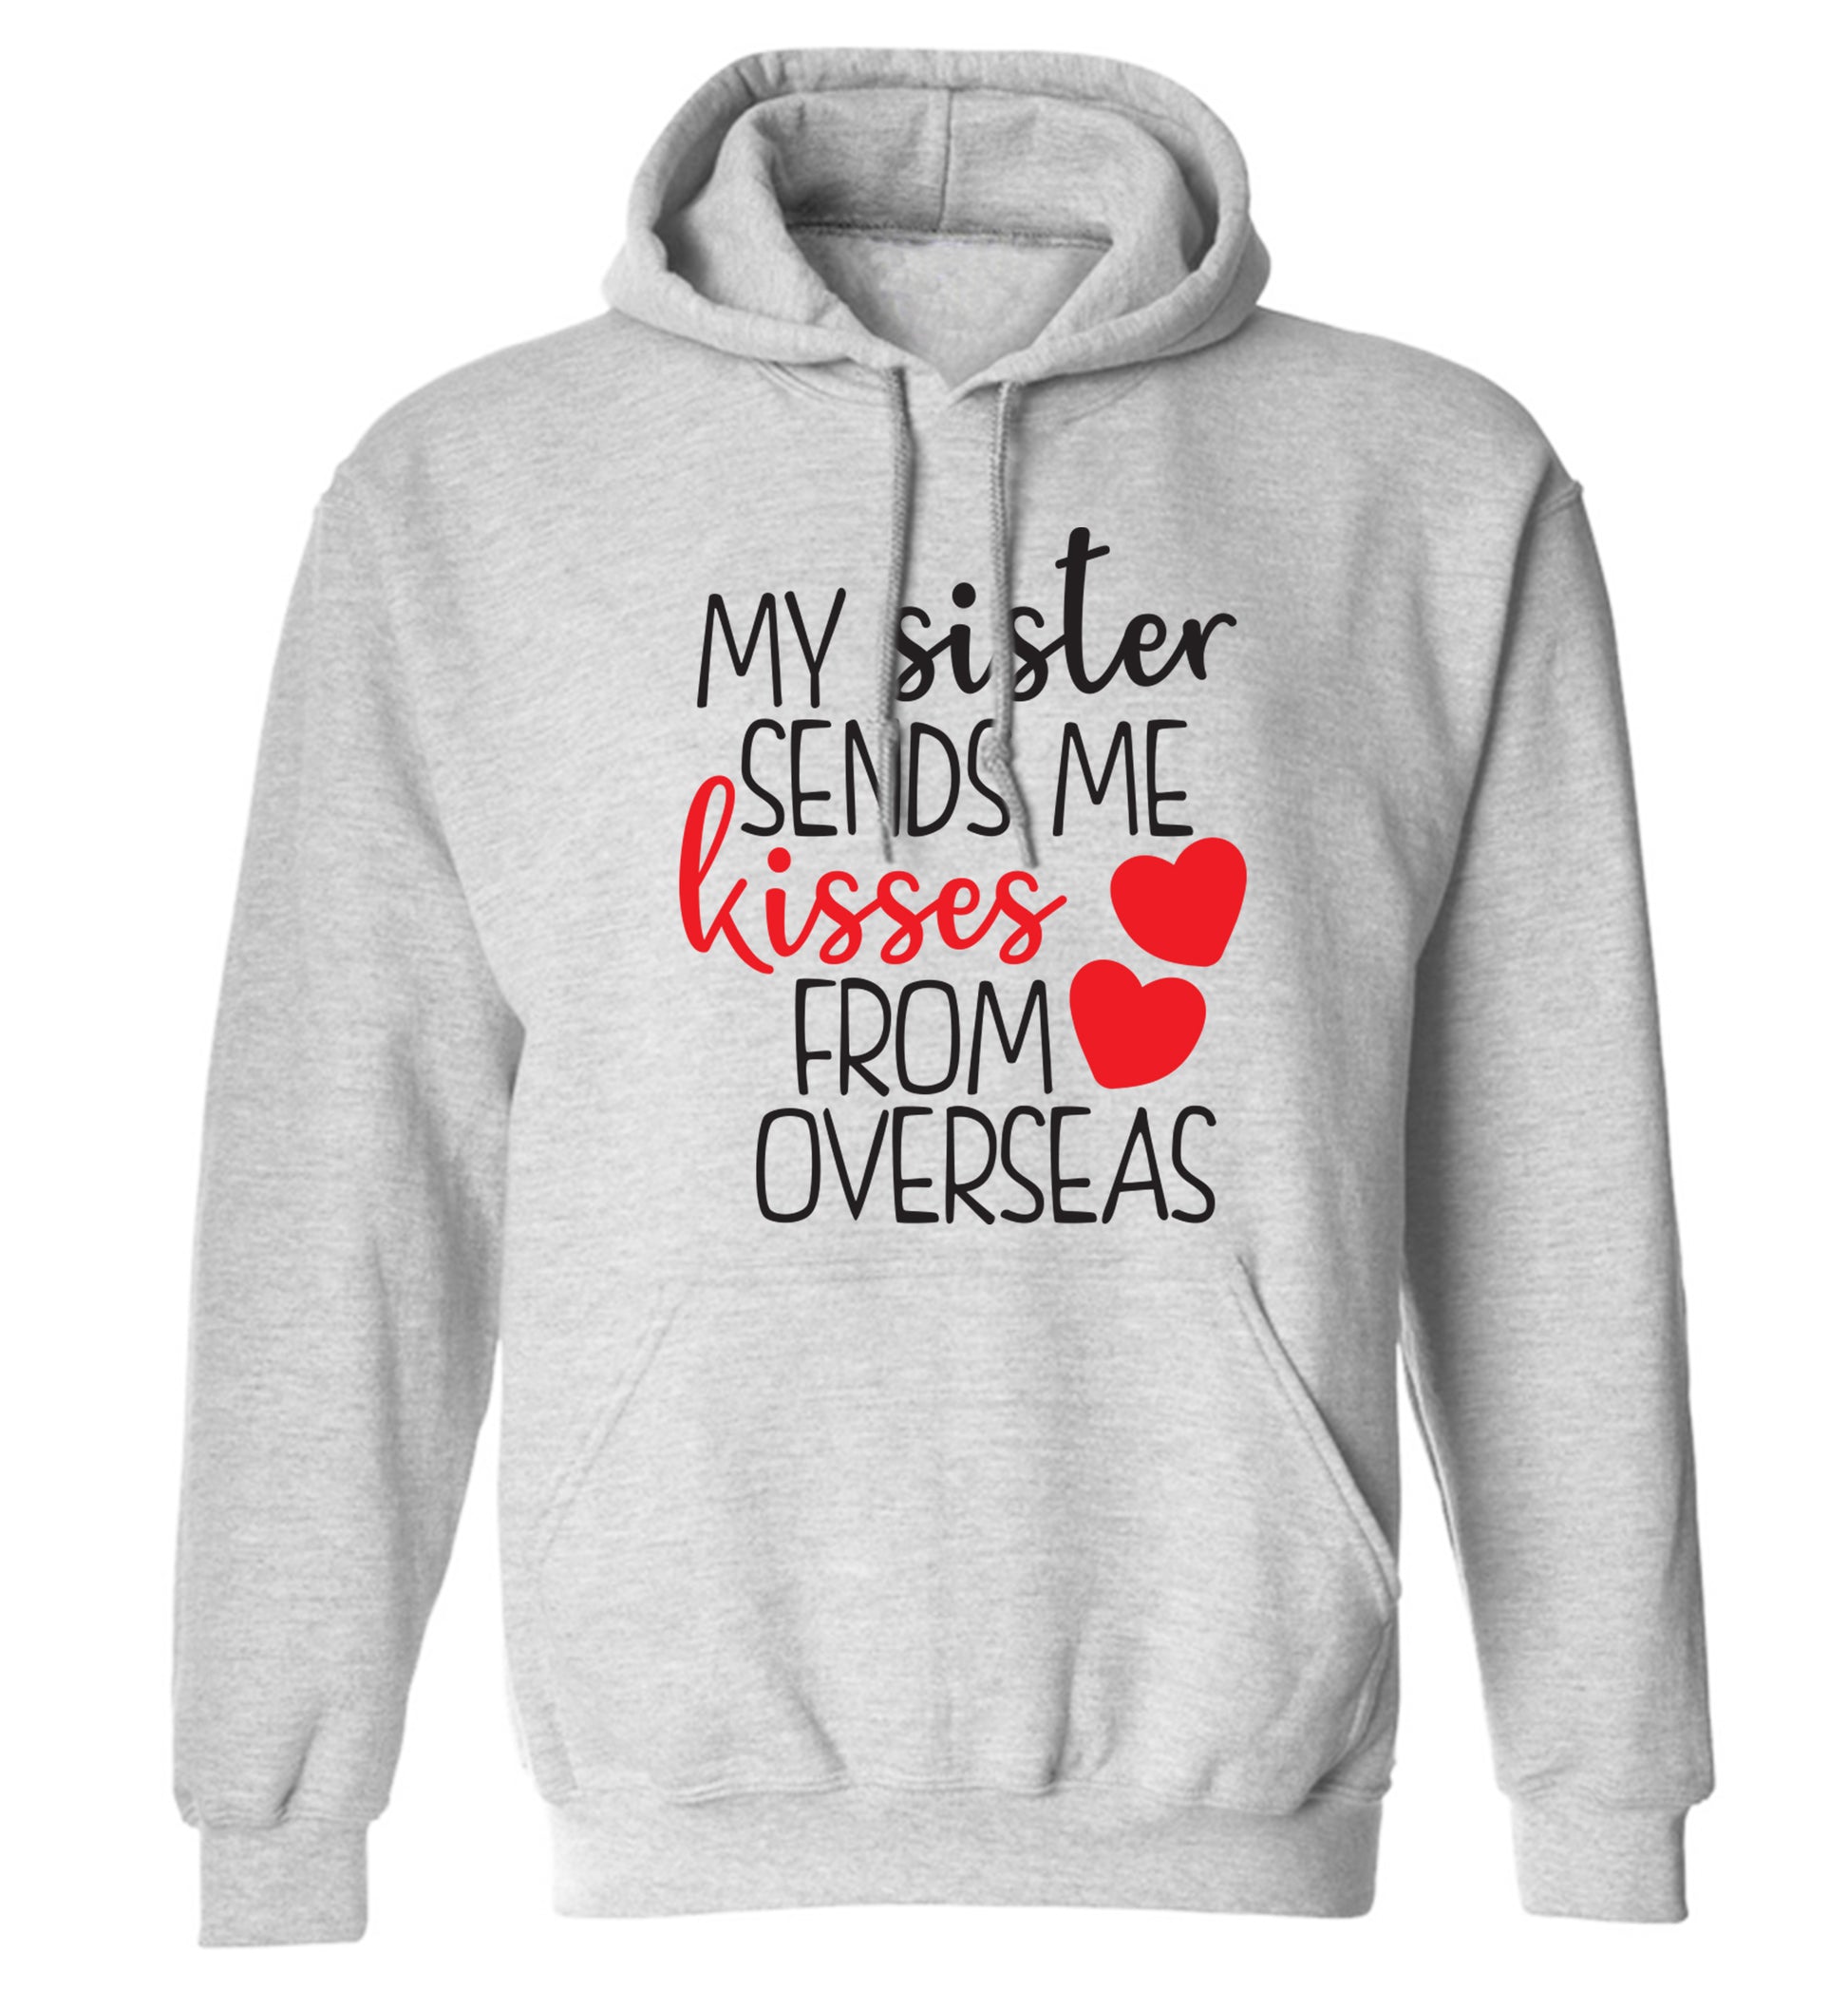 My sister sends me kisses from overseas adults unisex grey hoodie 2XL